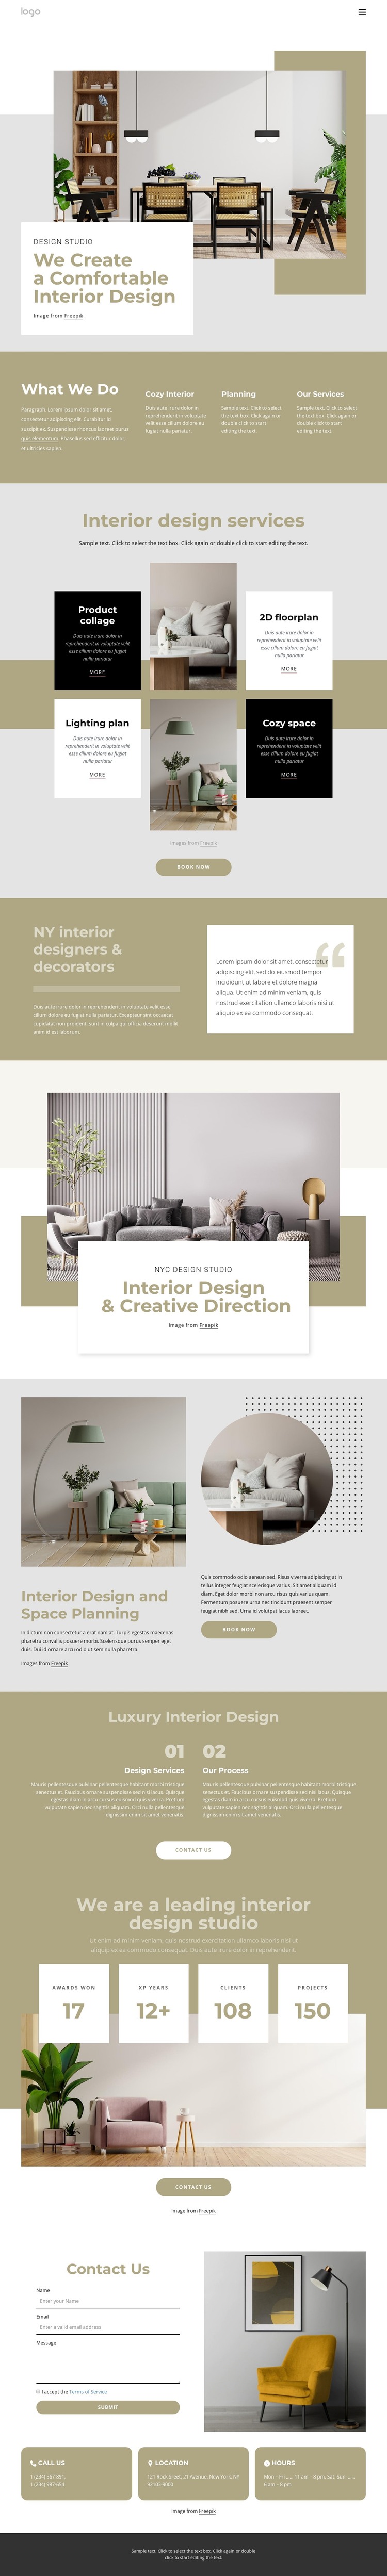 We create a comfortable interiors WordPress Theme